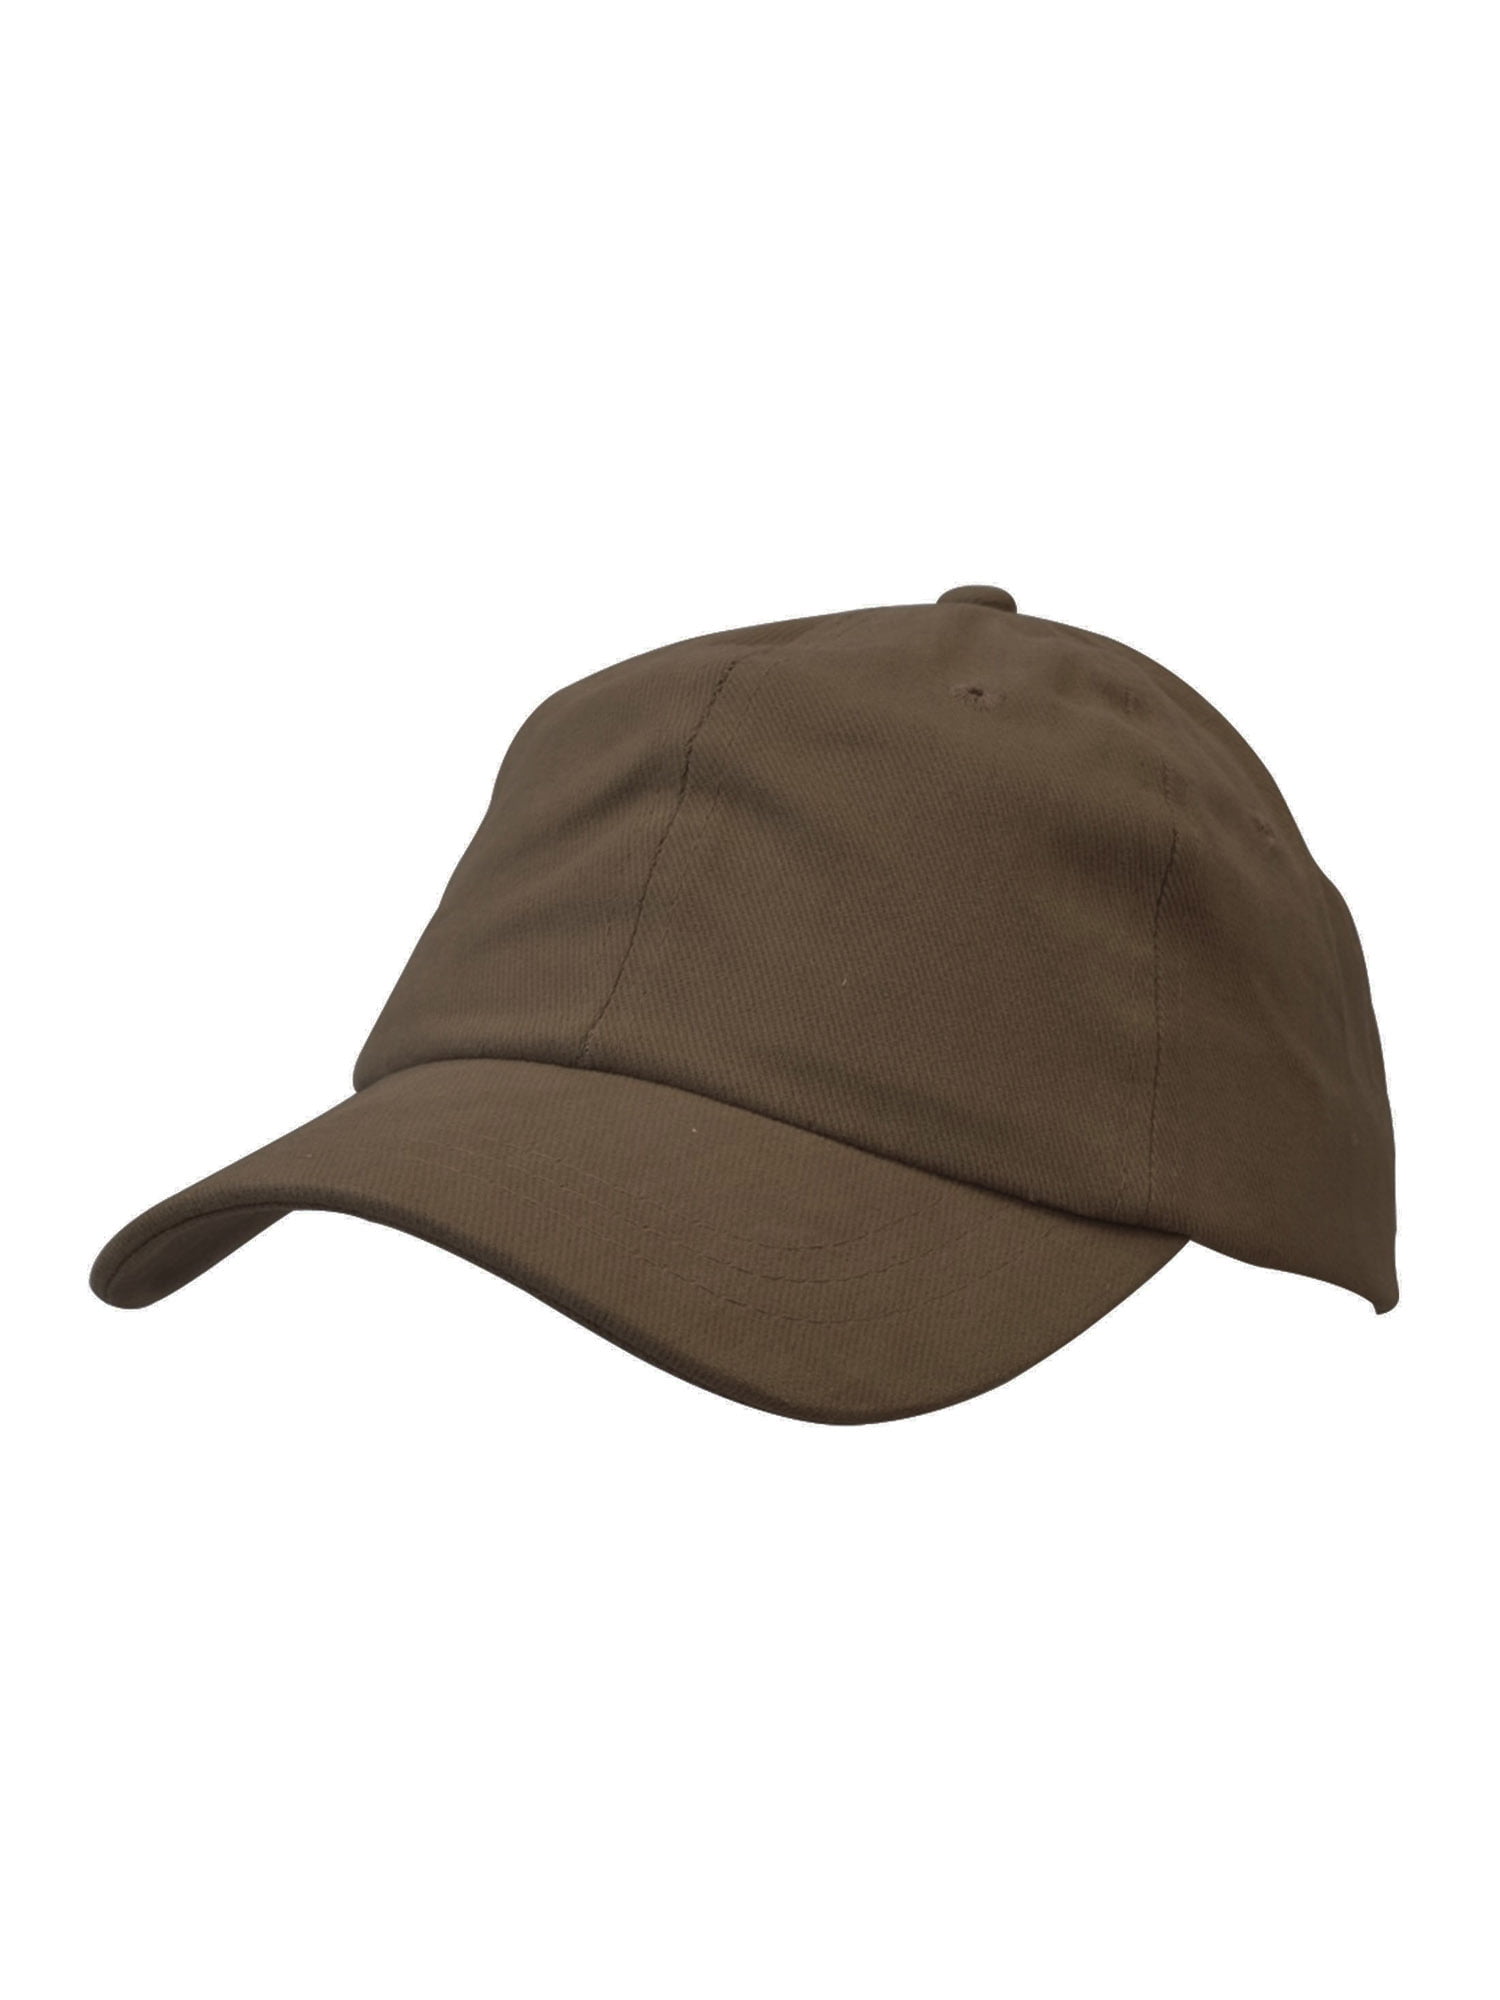 Baseball Cap Polo Style Classic Sports Casual Plain Sun Hat Unisex 100% Cotton 